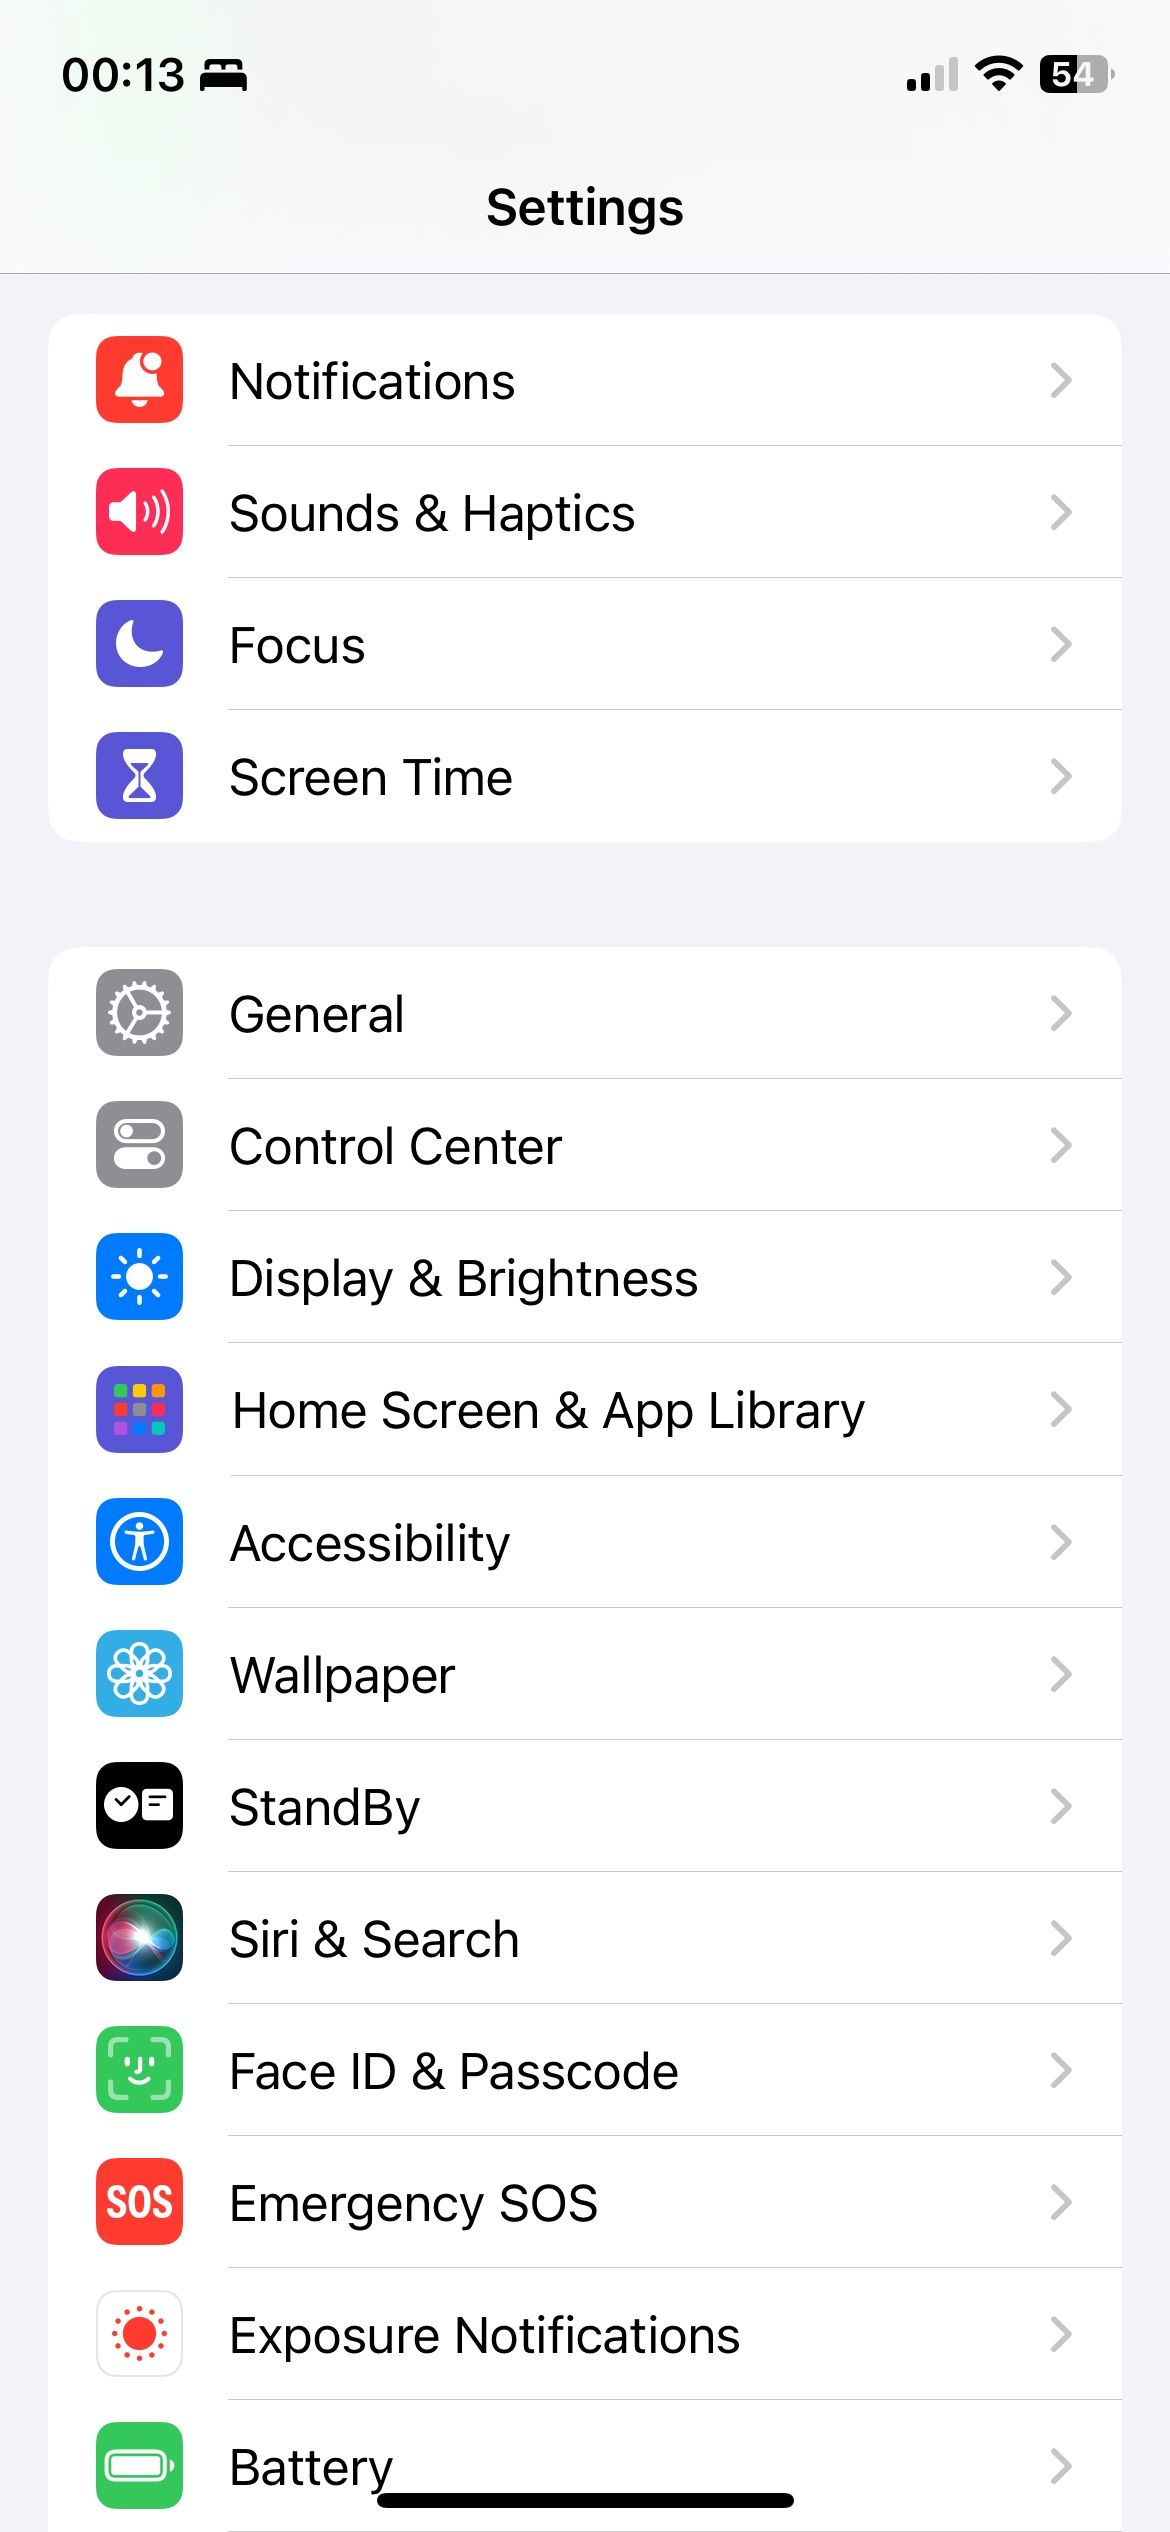 Main Screen in iPhone Settings App